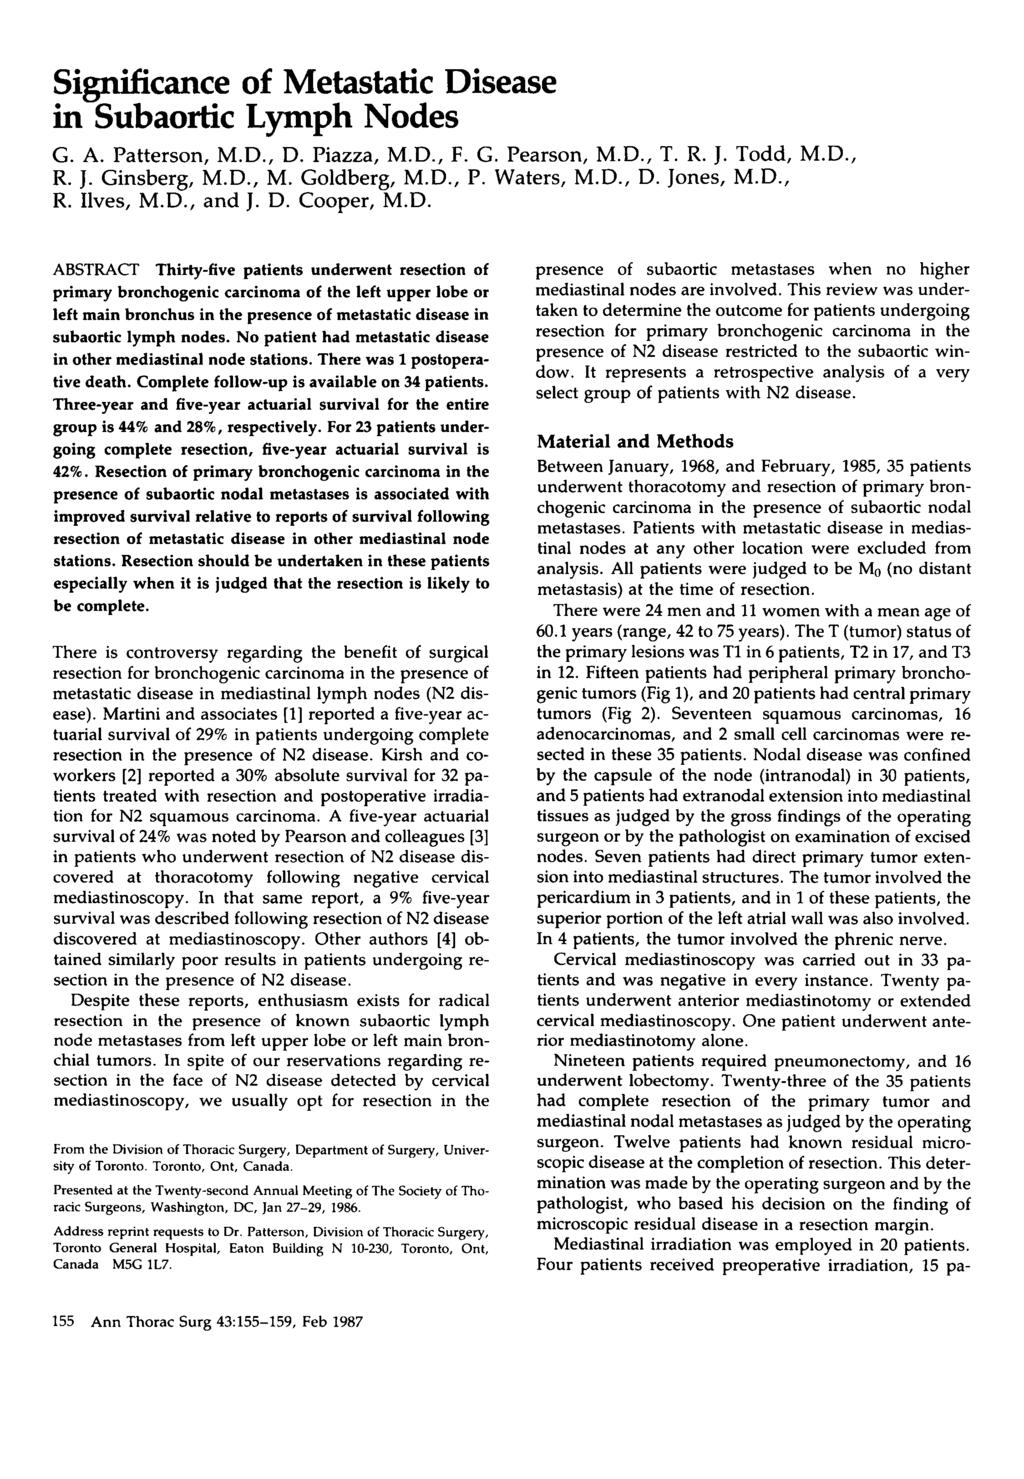 Significance of Metastatic Disease in Subaortic Lymph Nodes G. A. Patterson, M.D., D. Piazza, M.D., F. G. Pearson, M.D., T. R. J. Todd, M.D., R. J. Ginsberg, M.D., M. Goldberg, M.D., P. Waters, M.D., D. Jones, M.